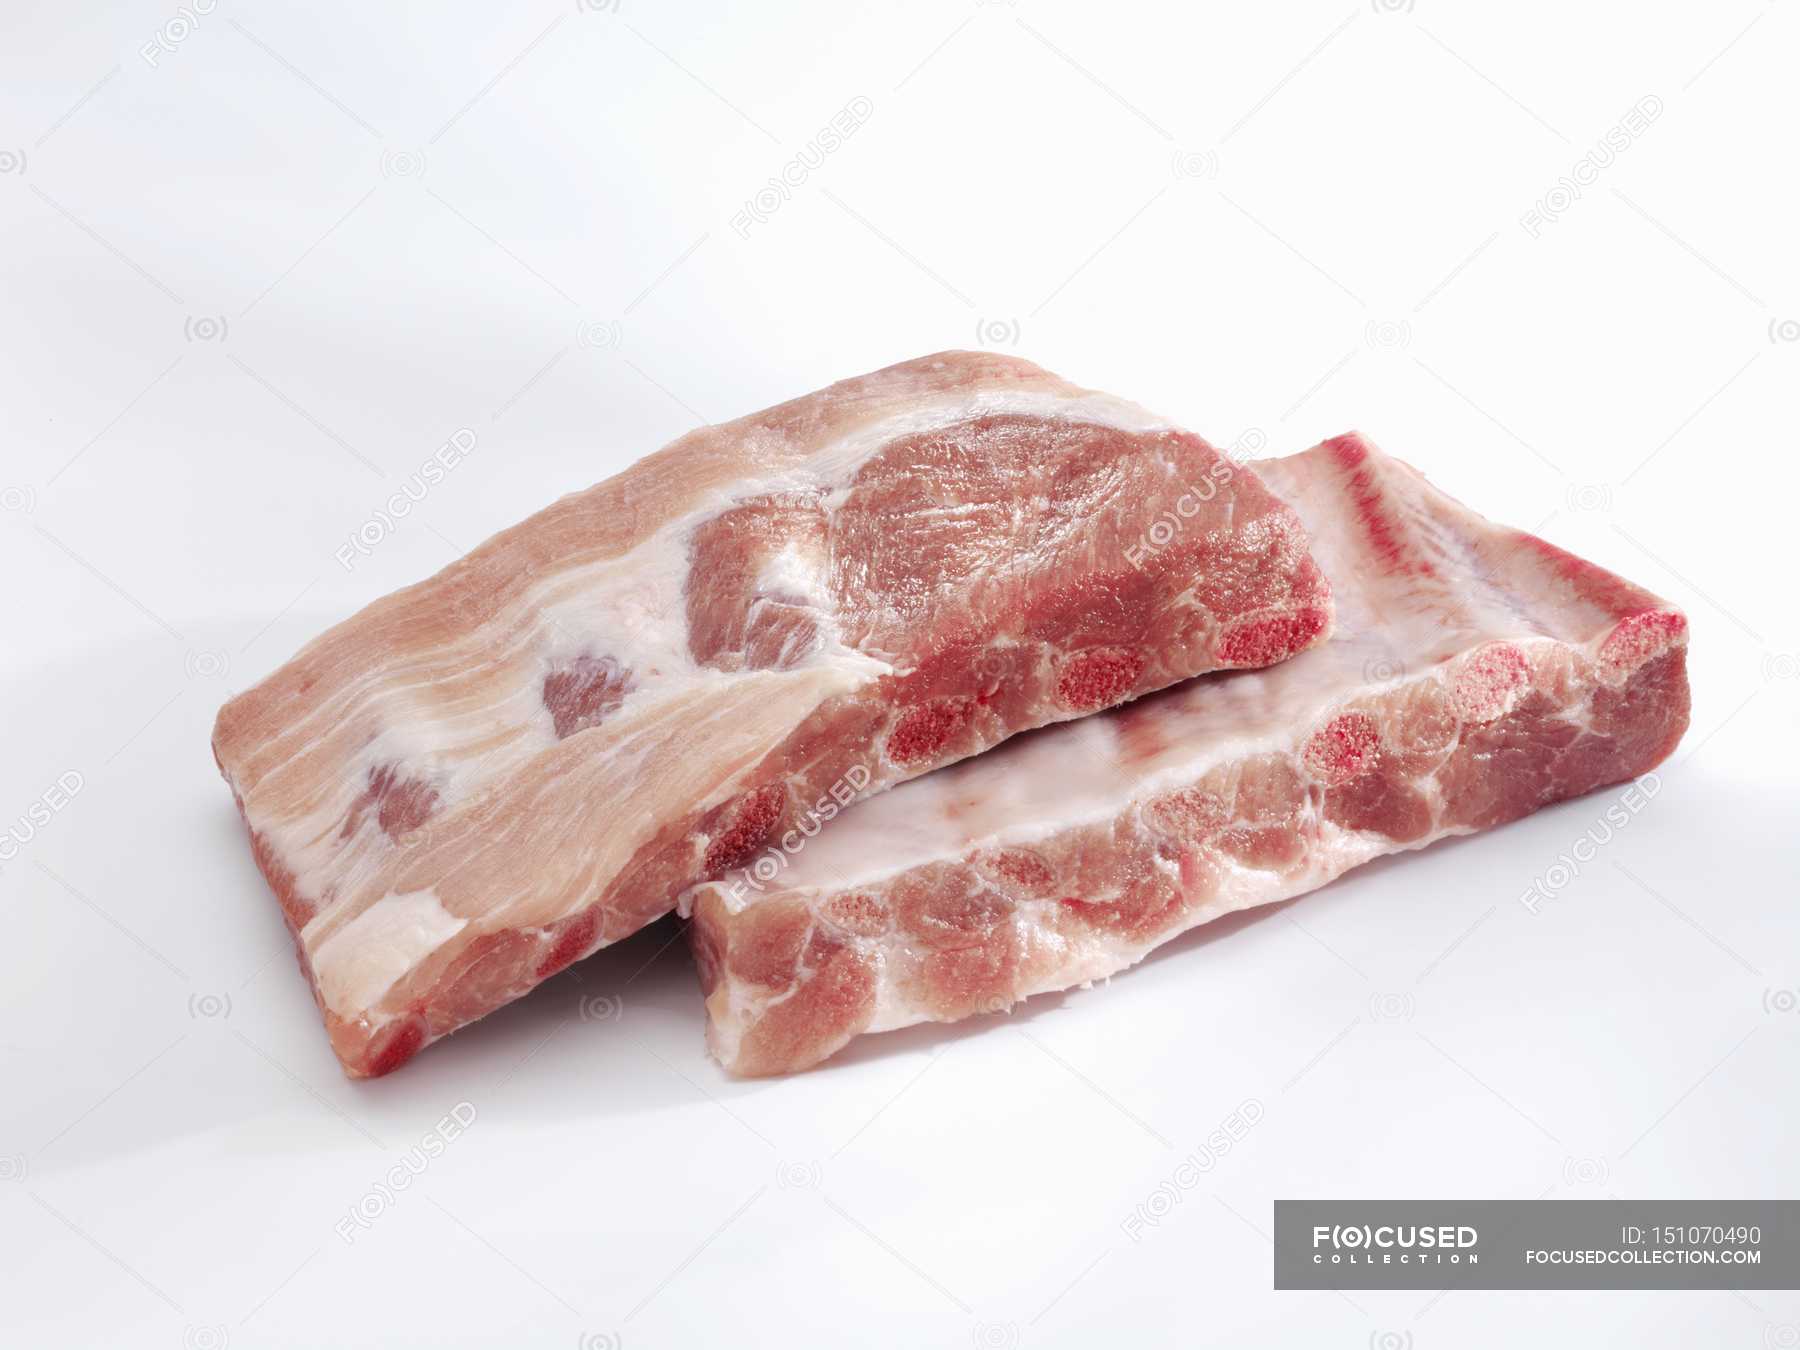 Raw Pork ribs — Stock Photo | #151070490